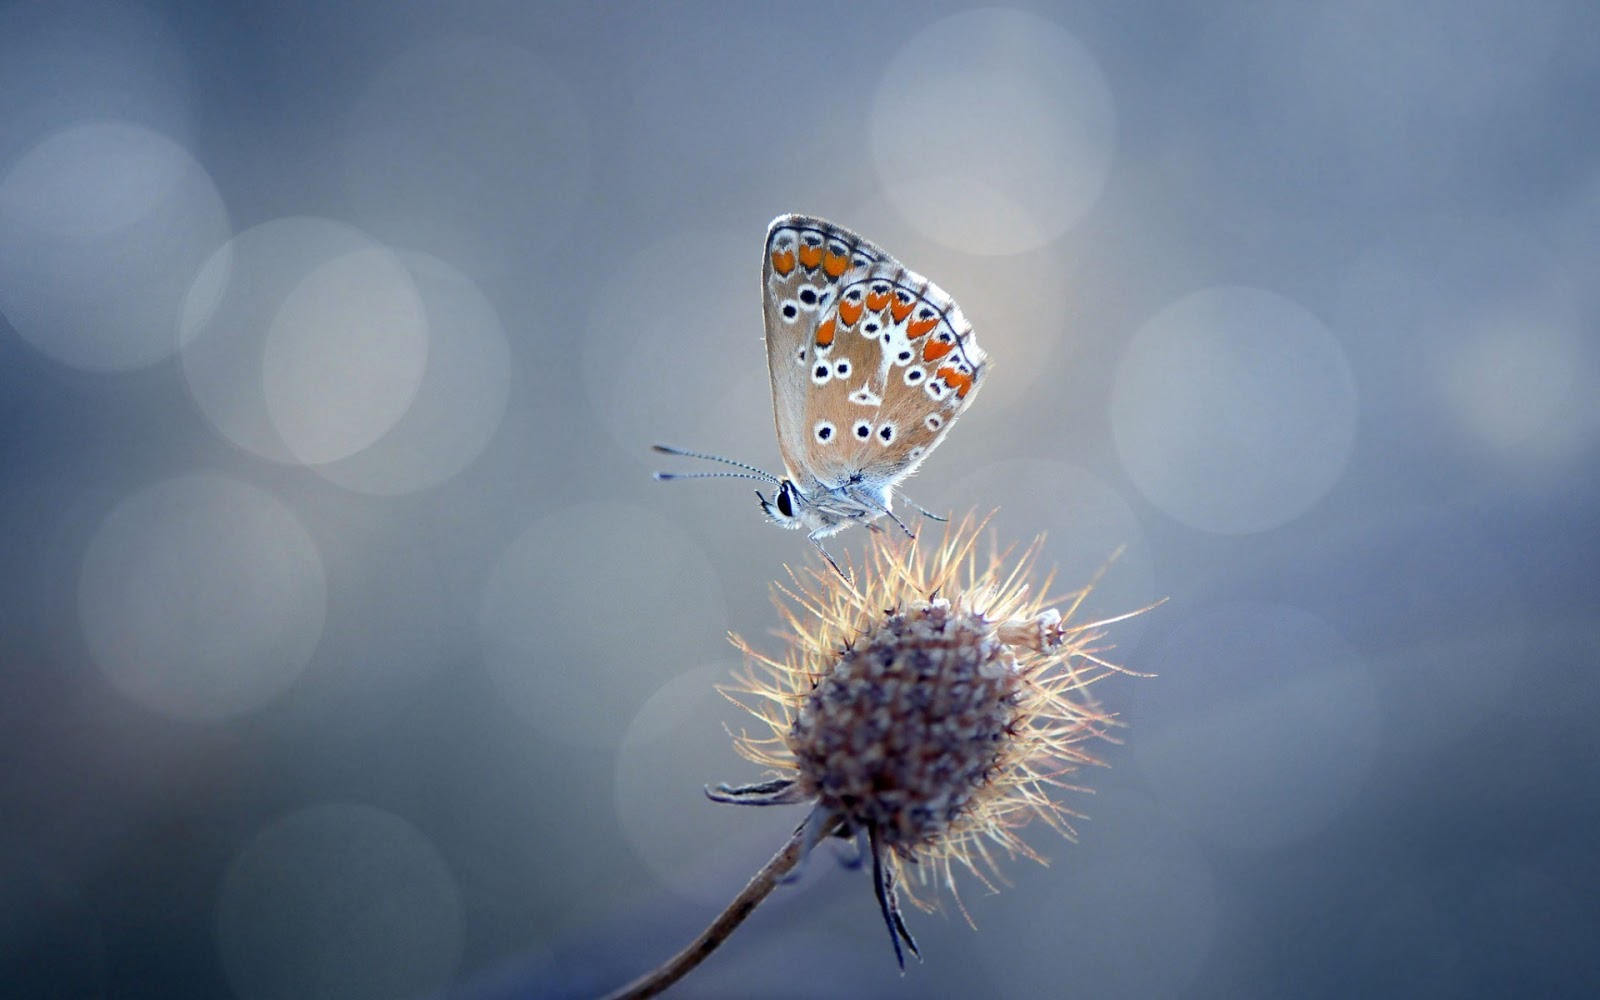 Butterfly - HD Wallpapers | Earth Blog